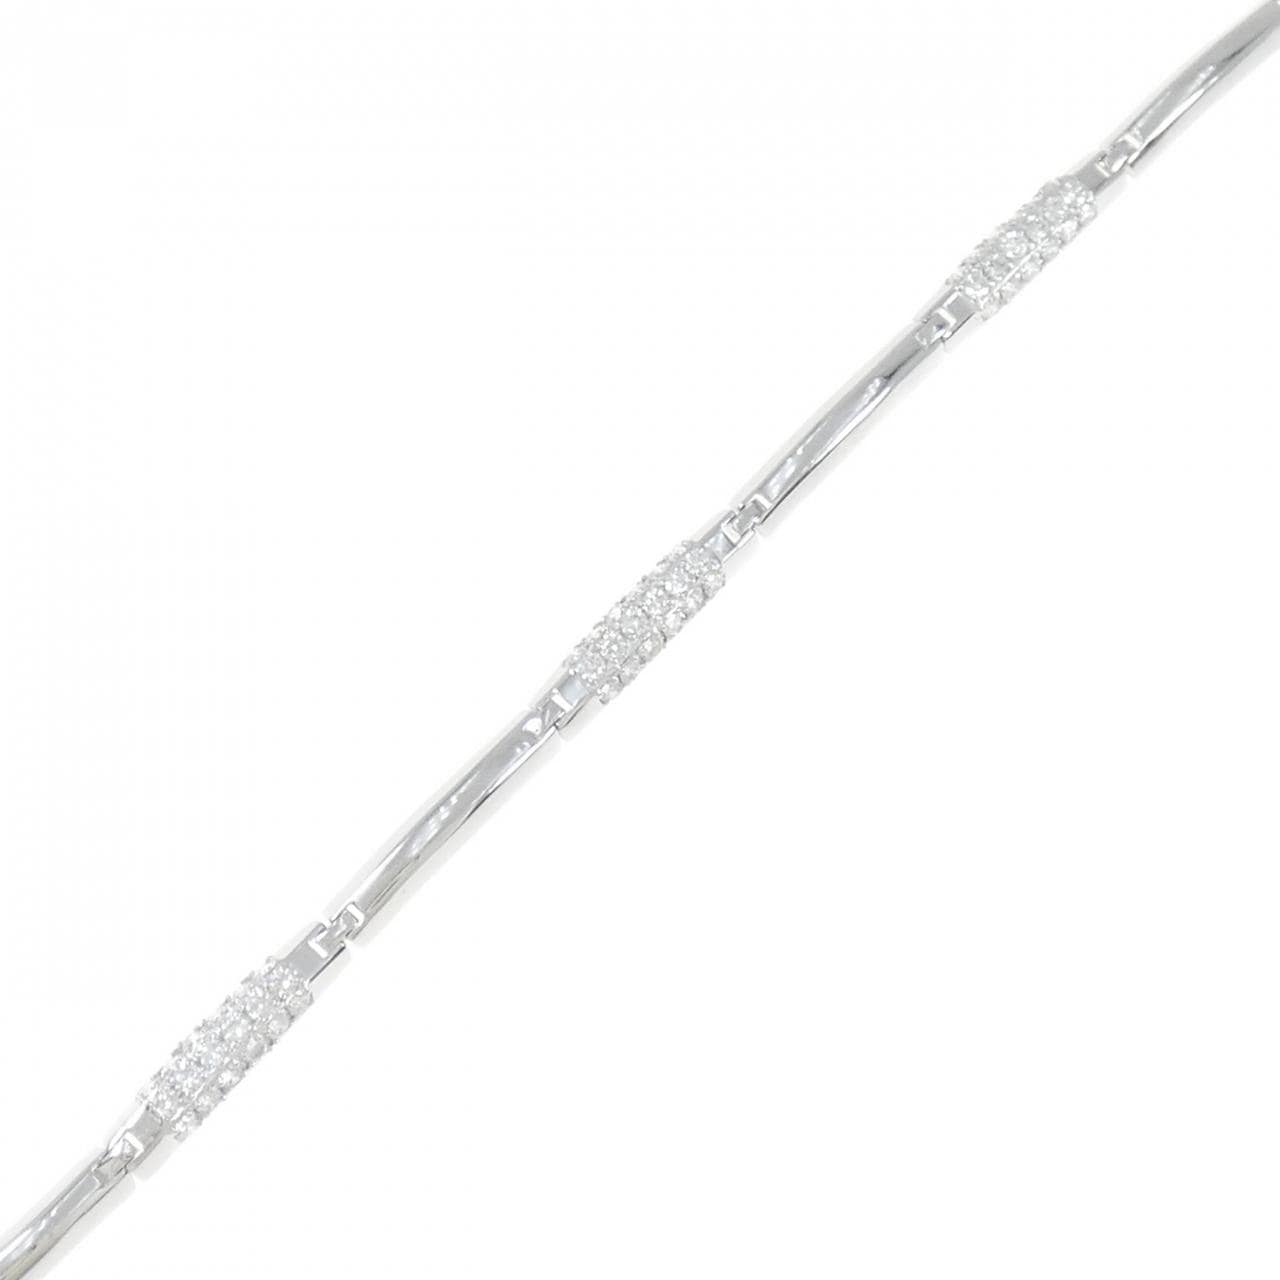 K18WG Diamond bracelet 1.30CT